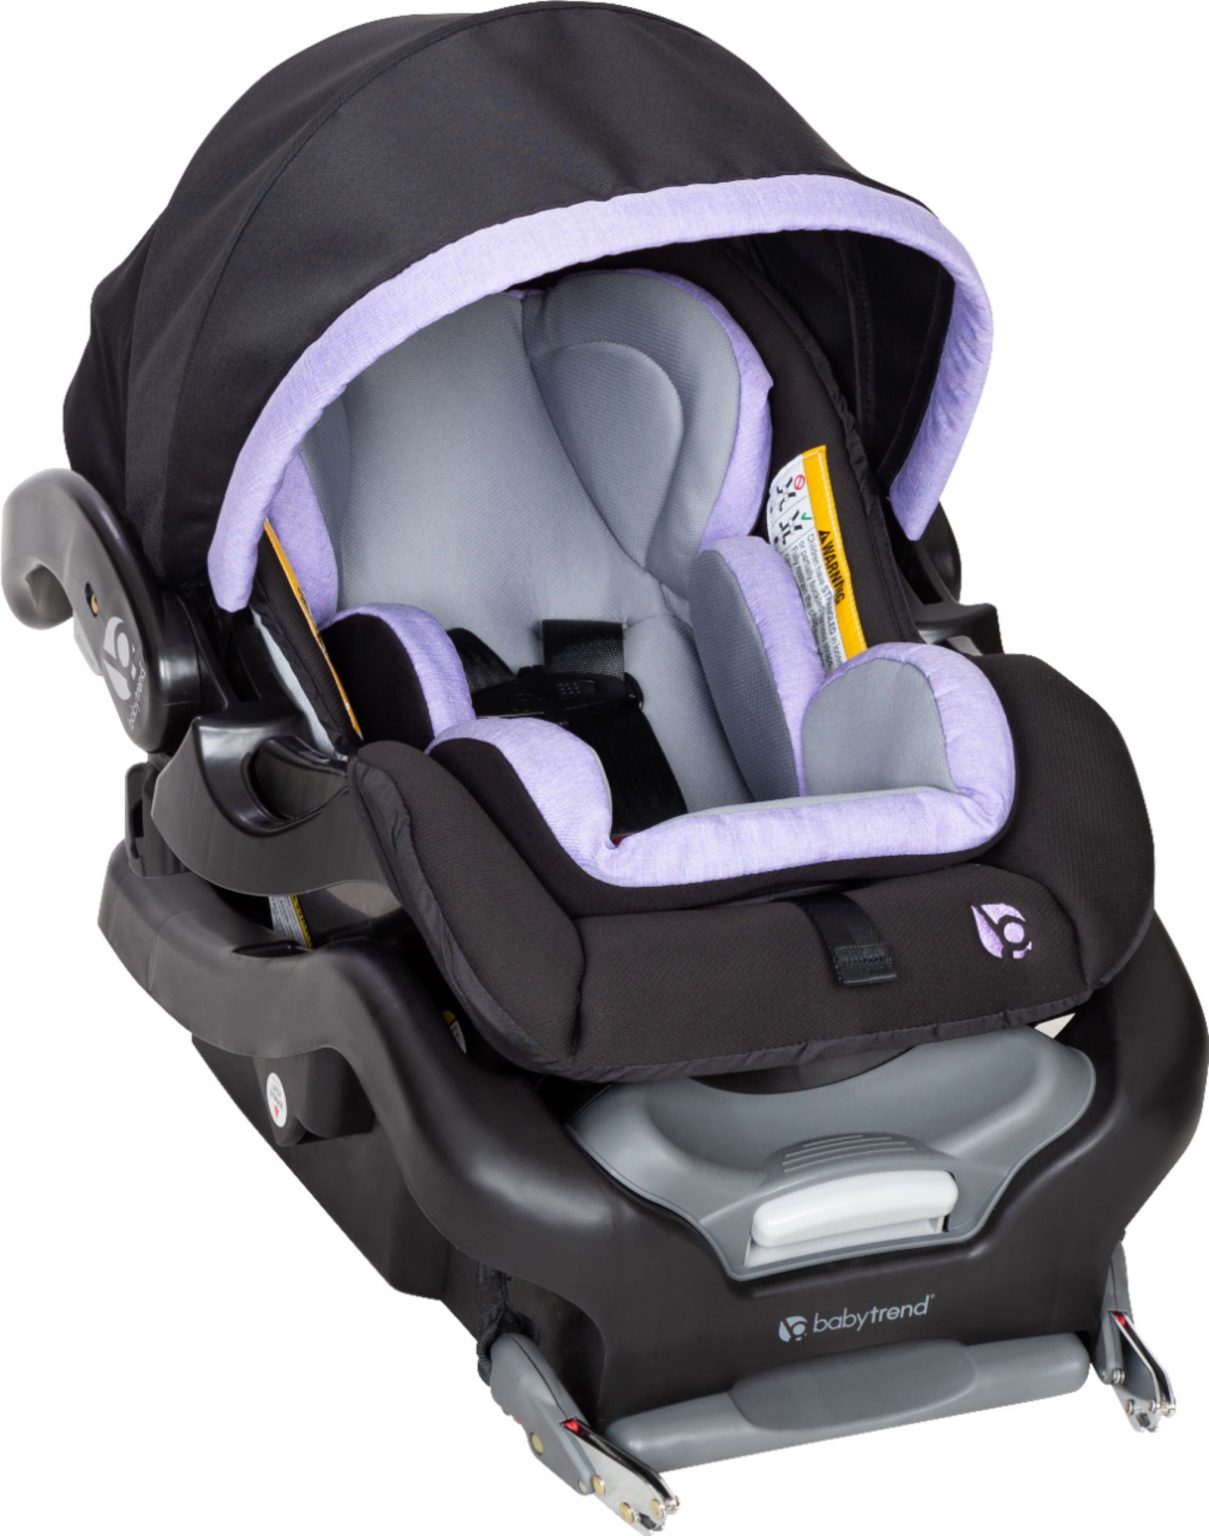 Baby Trend Infant Car Seat Major Price Drop - Glitchndealz